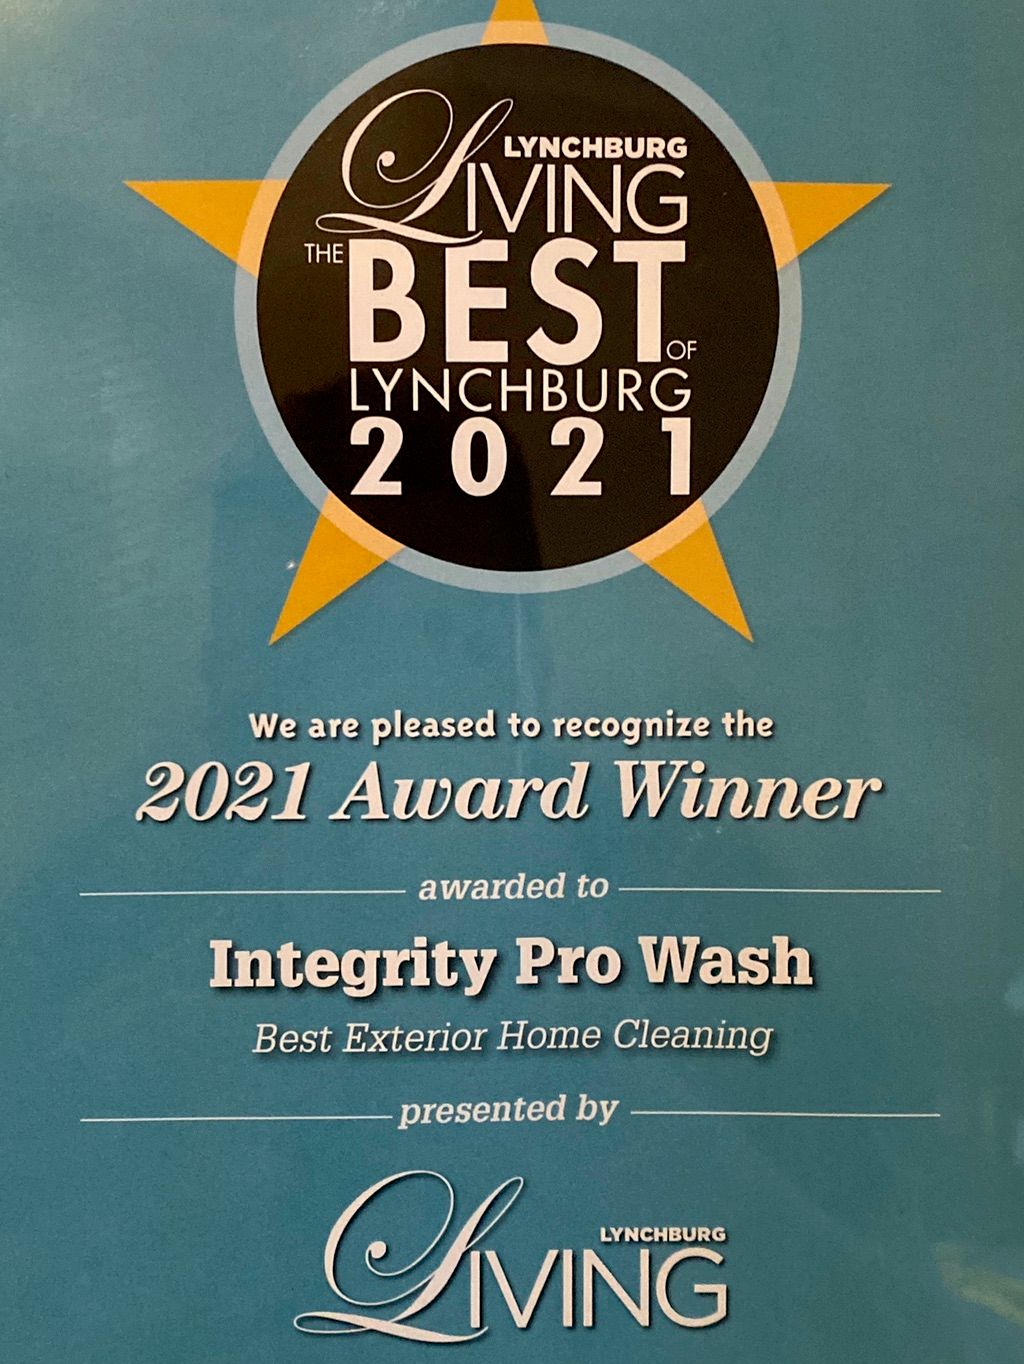 Integrity Pro Wash